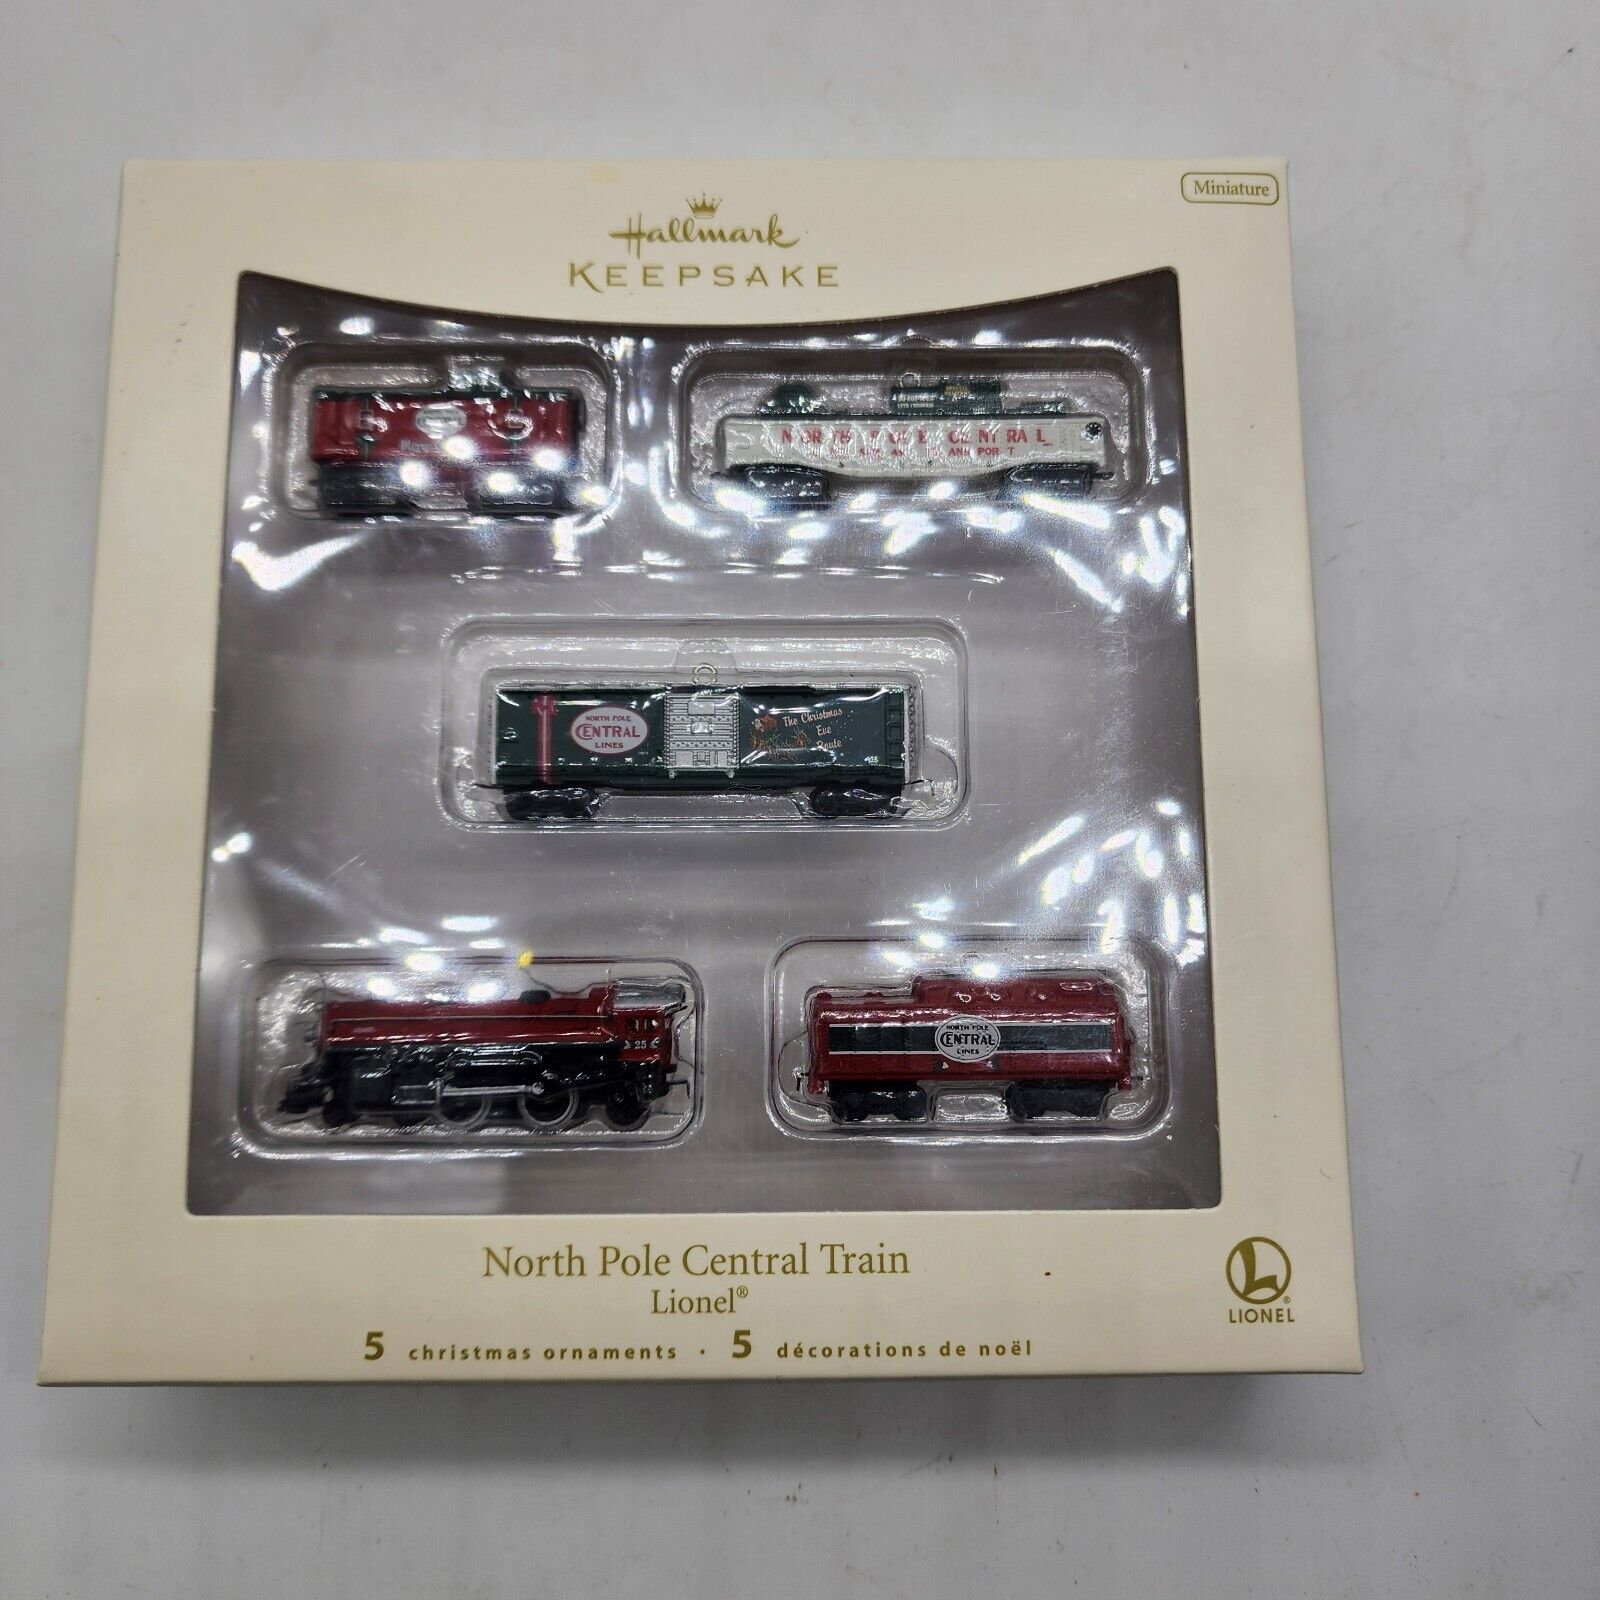 2007 North Pole Central Train Lionel Hallmark Keepsake Miniature Ornament Set